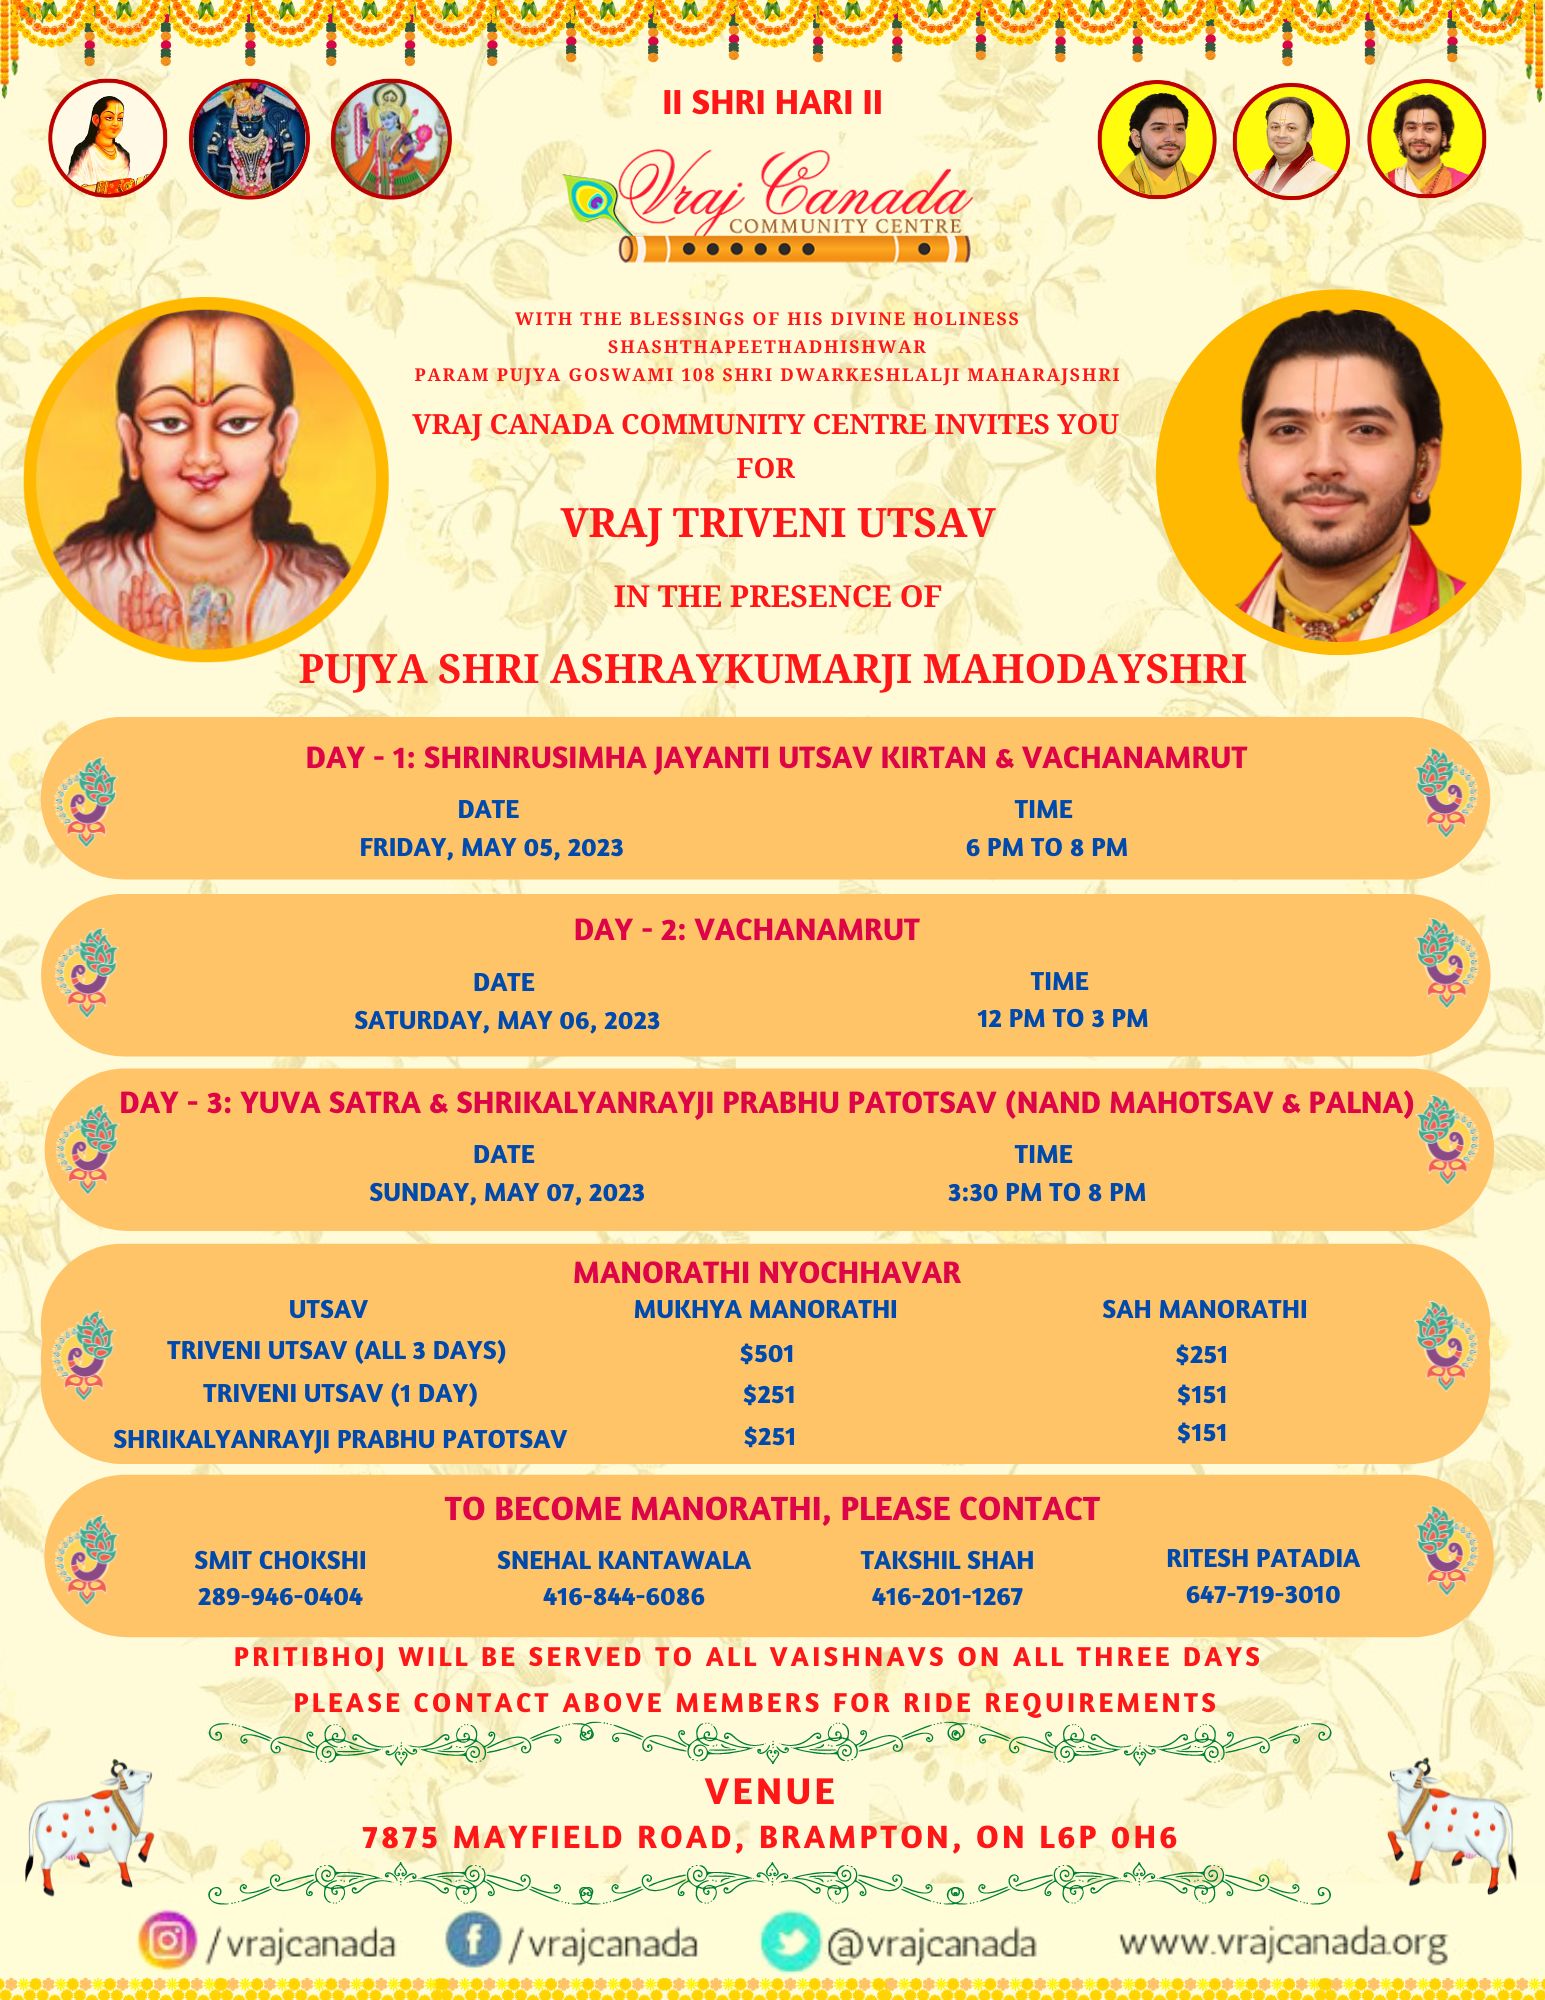 DAY-1 Shrinrusimha Jayanti Utsav Kirtan & Vachanamrut